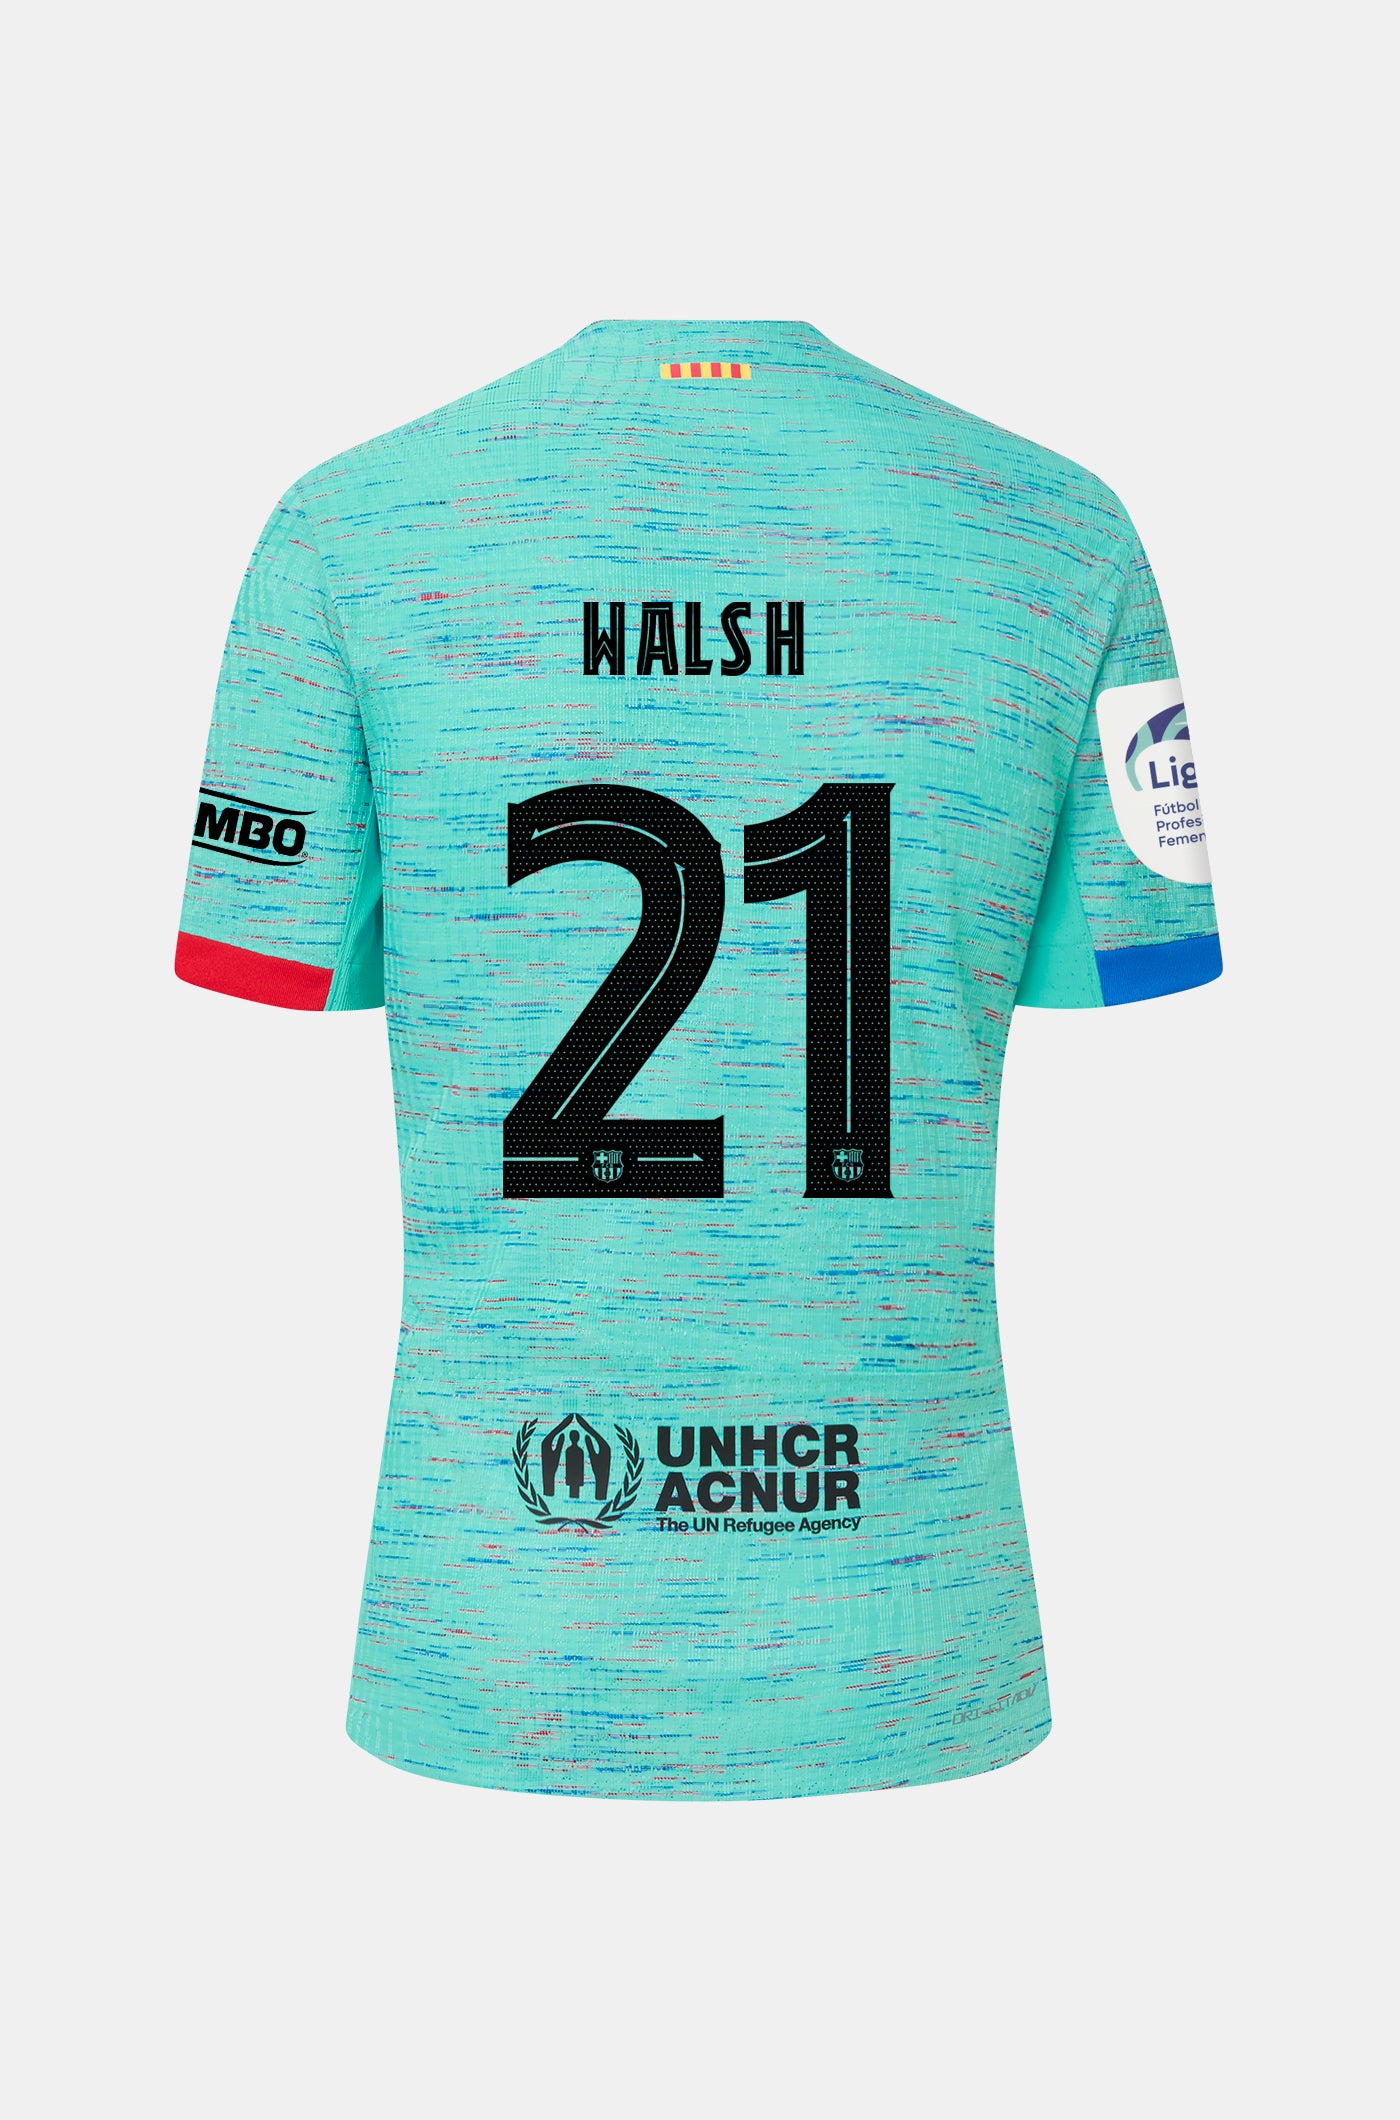 Liga F FC Barcelona third Shirt 23/24 Player’s Edition - WALSH